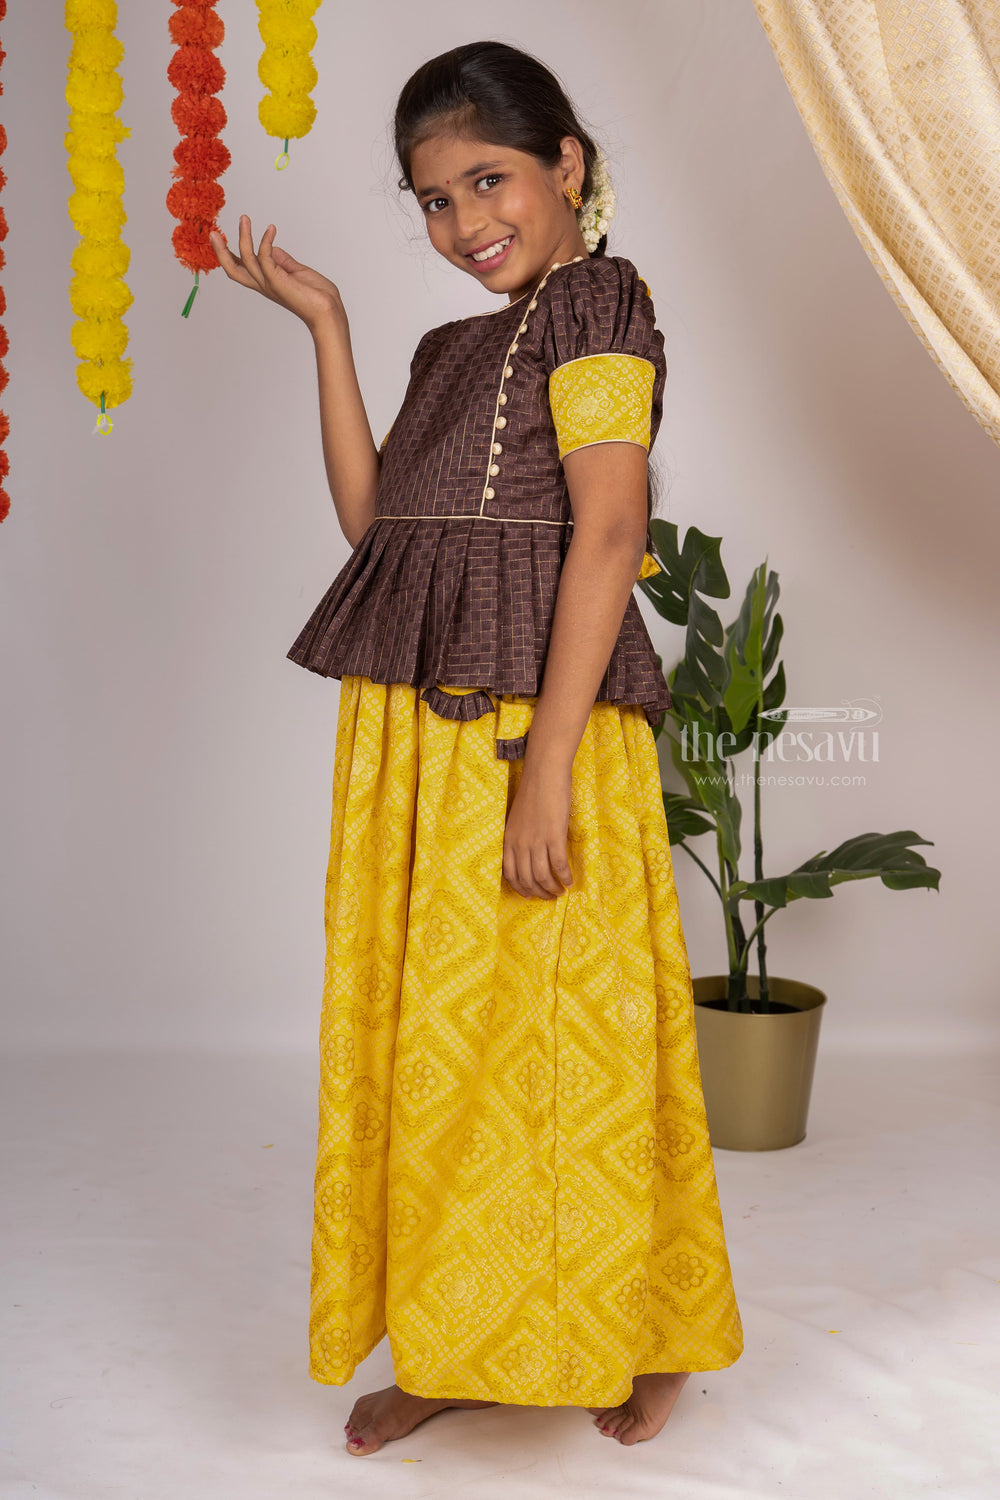 The Nesavu Pattu Pavadai Traditional Yellow With Coffee Brown Peplum Pleated Designer Indian Wear psr silks Nesavu